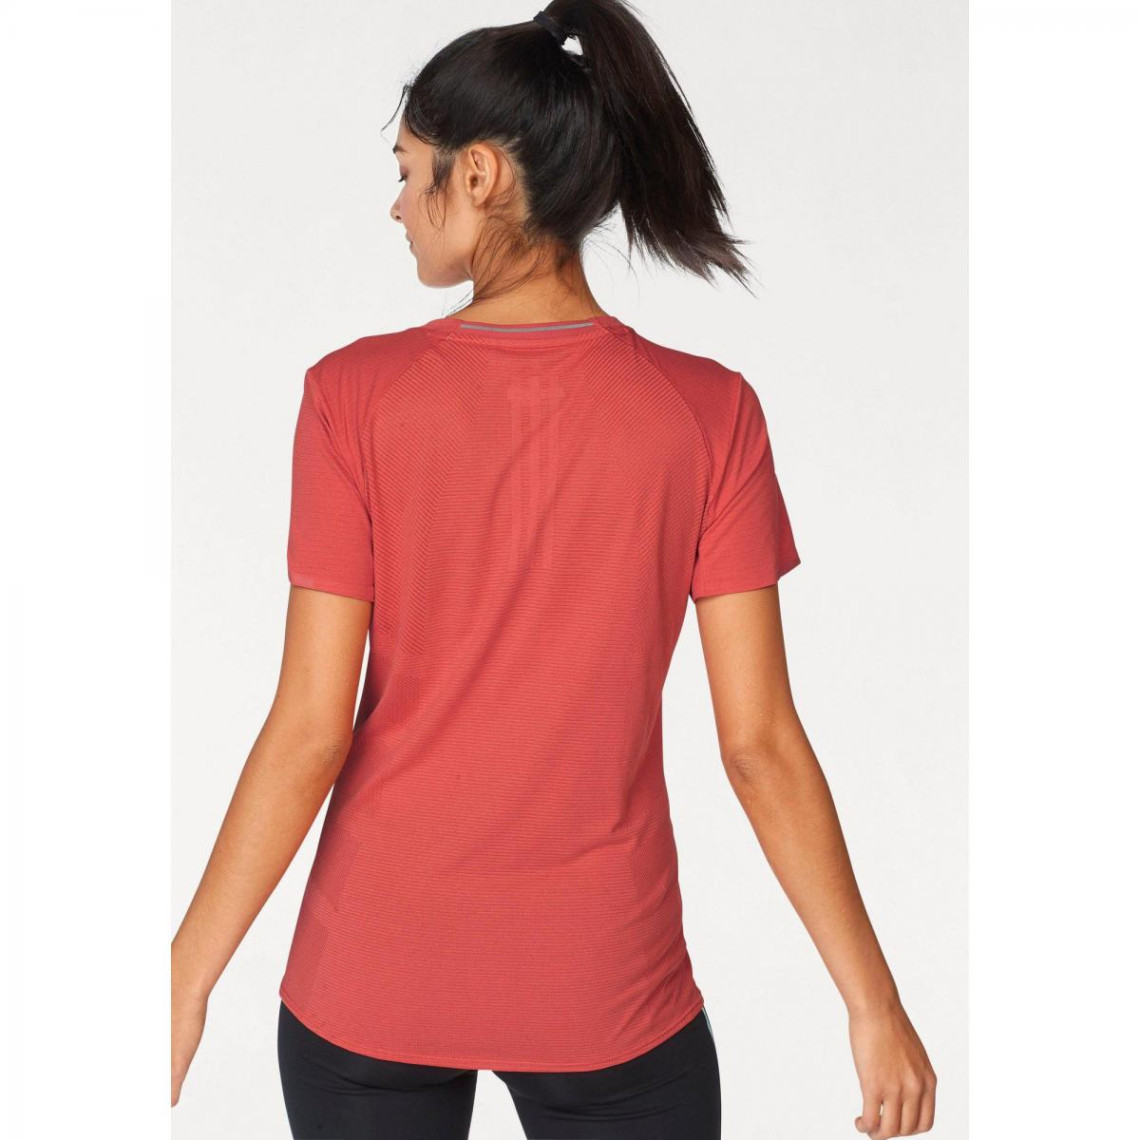 tee shirt adidas femme rouge